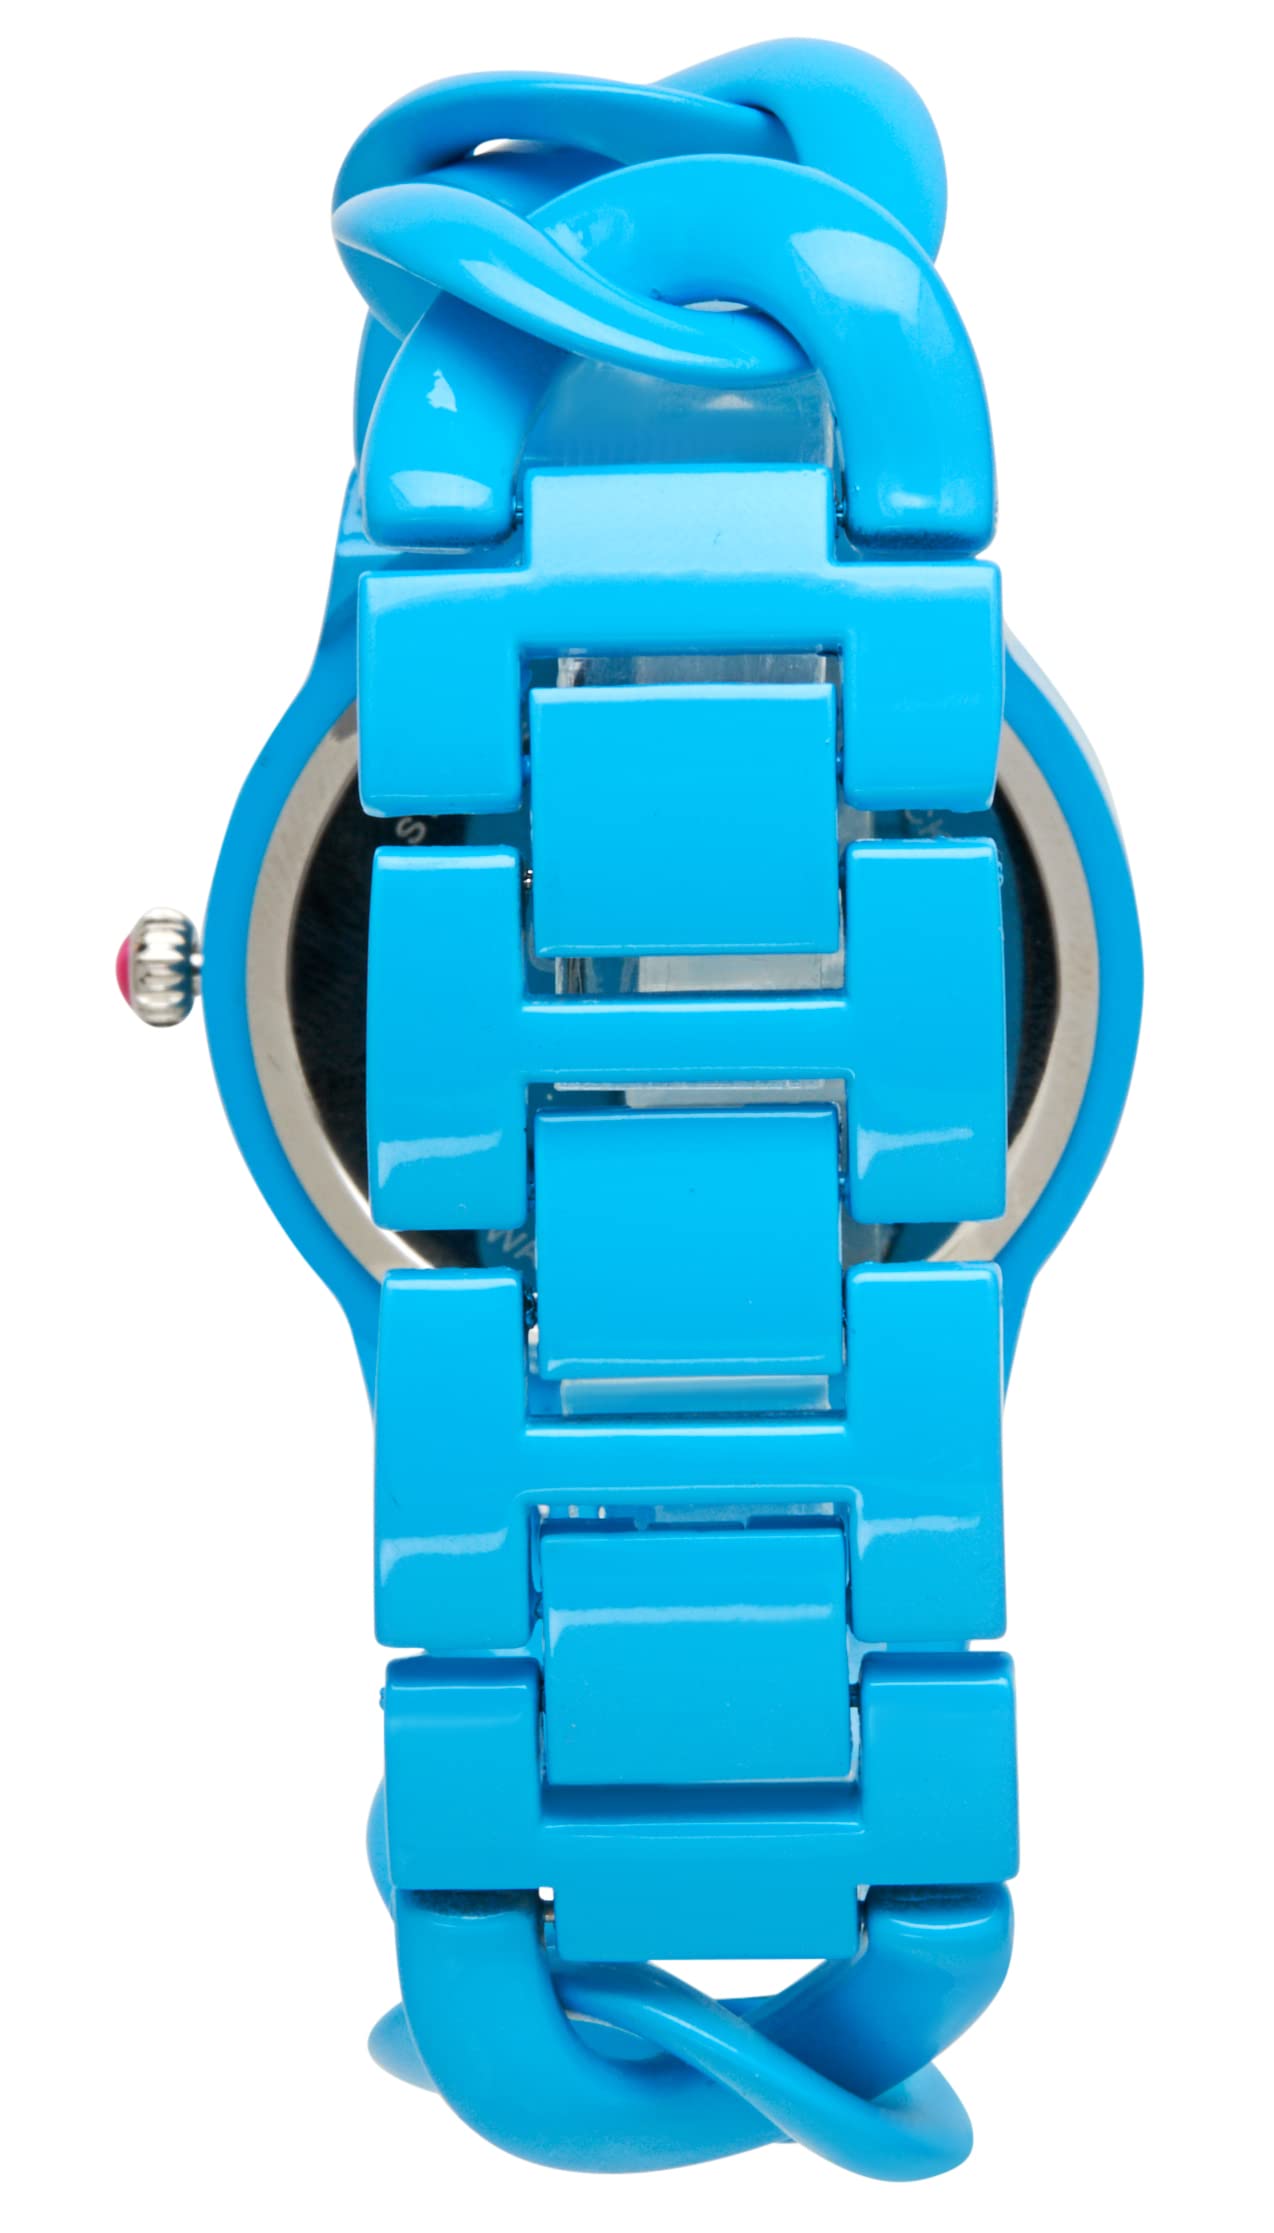 Betsey Johnson Women's Watch - Curb Chain Bracelet Wristwatch, 3 Hand Quartz Movement: BJW014M1